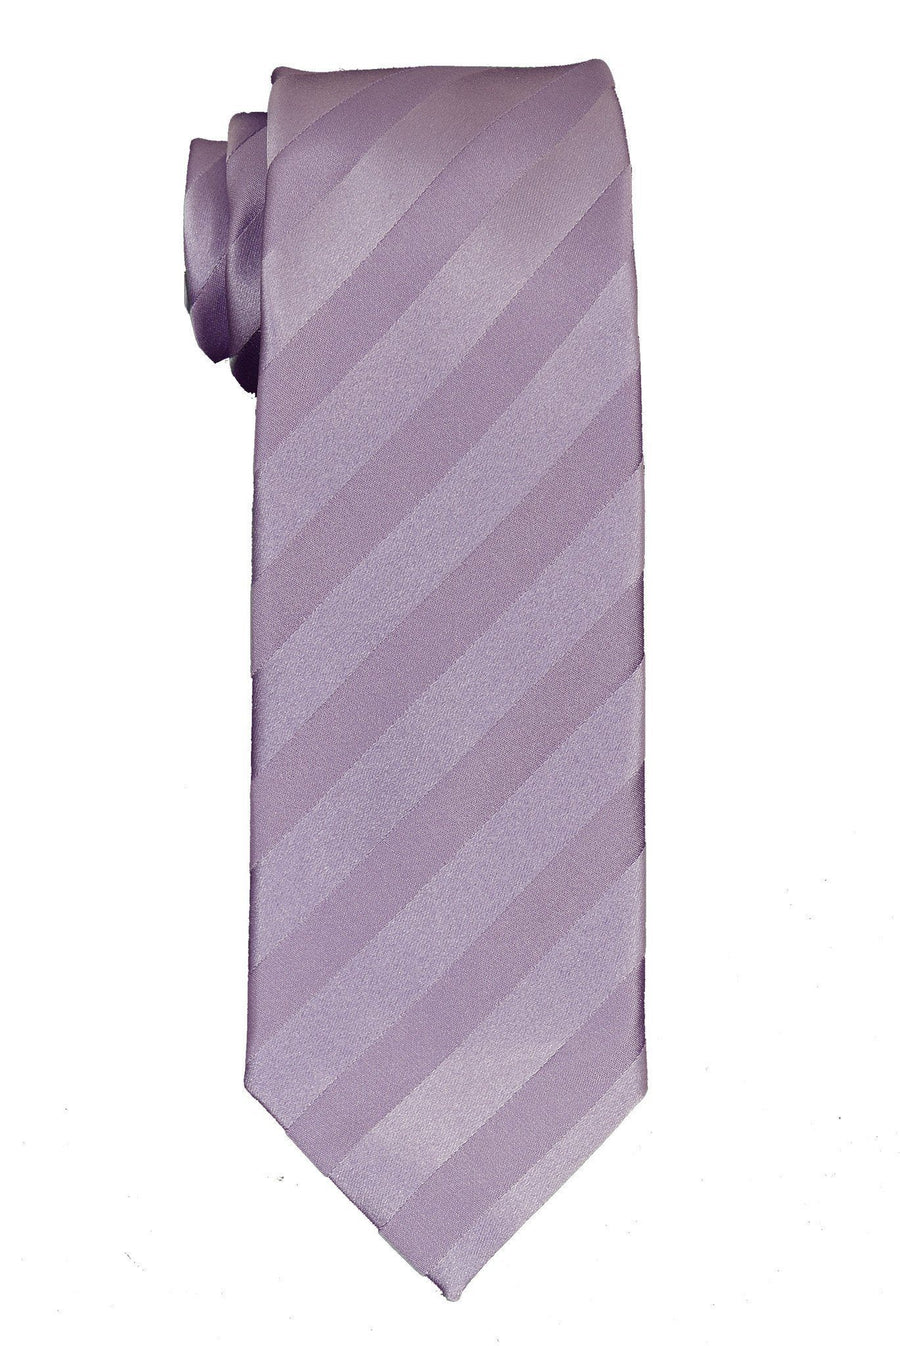 Heritage House 7558 100% Woven Silk Boy's Tie - Tonal Stripe - Lilac